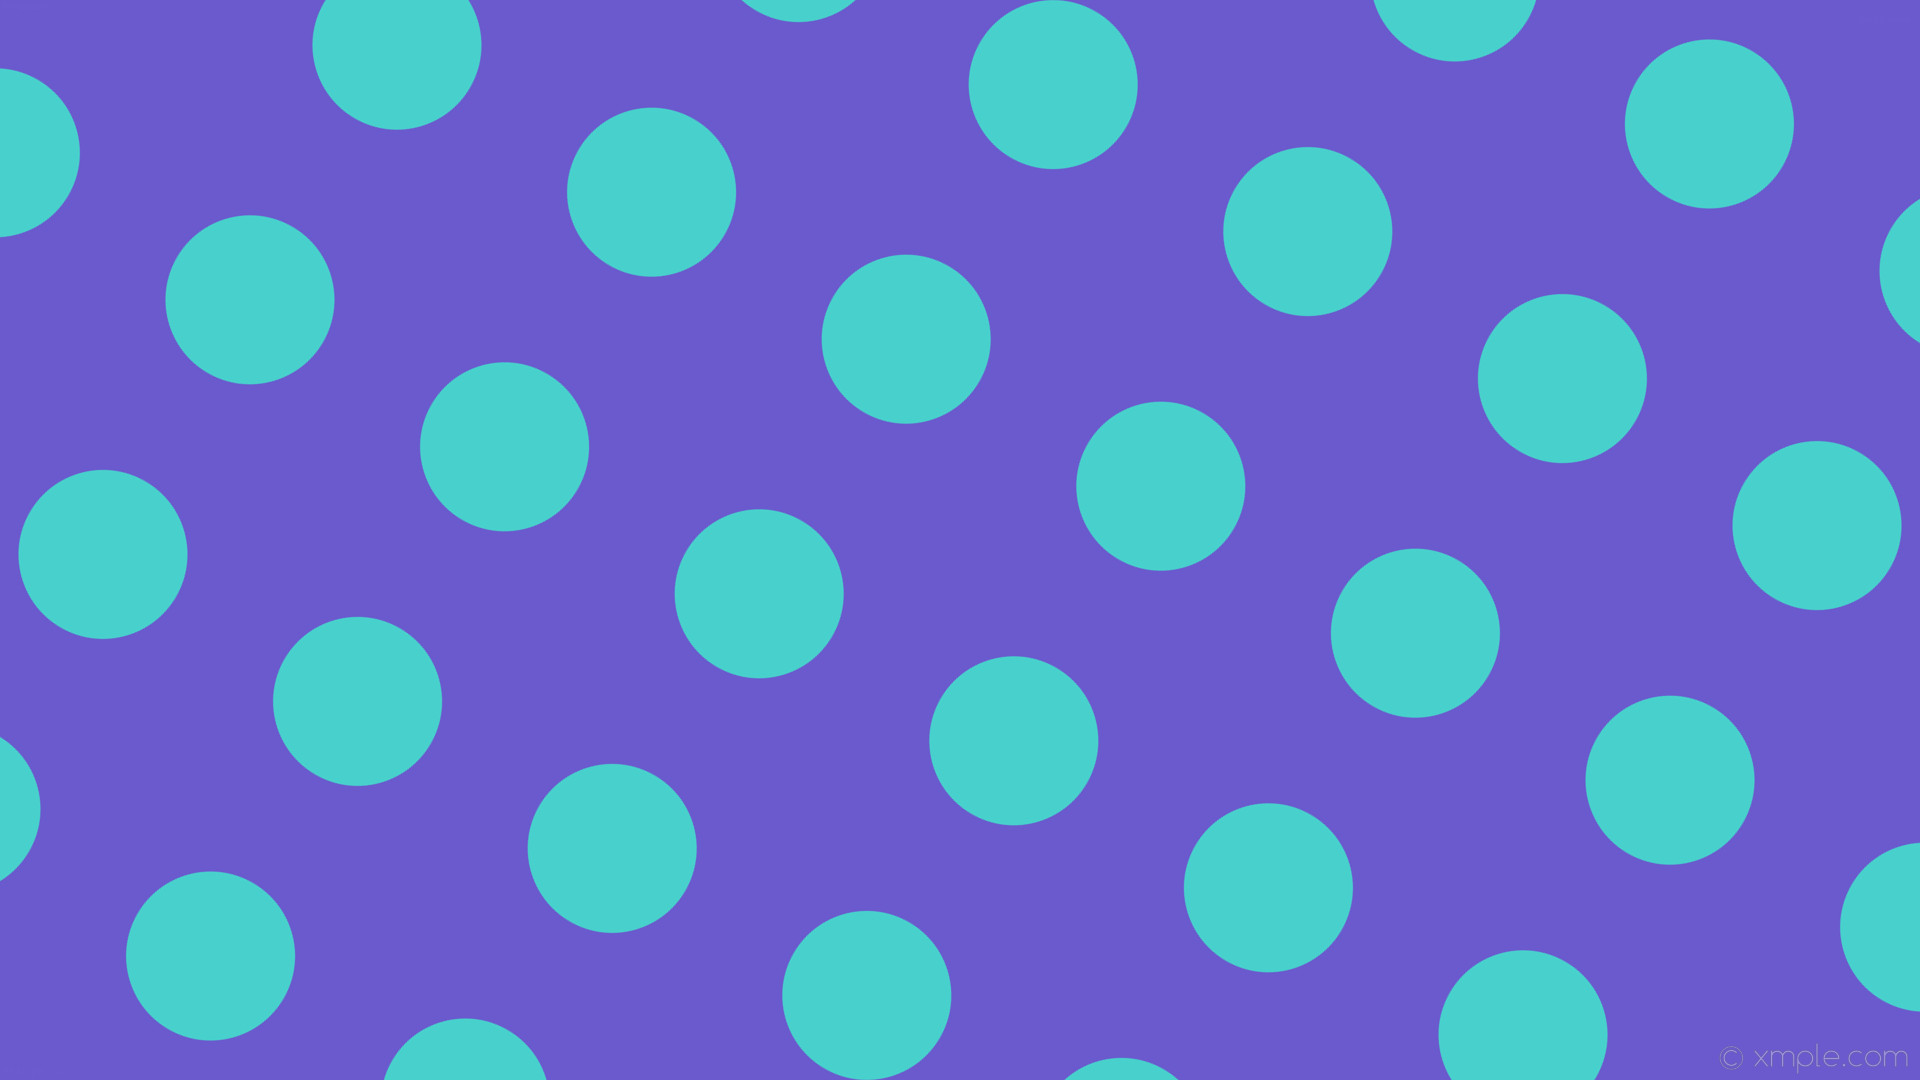 1920x1080 wallpaper blue polka dots purple spots slate blue medium turquoise #6a5acd  #48d1cc 330Â°